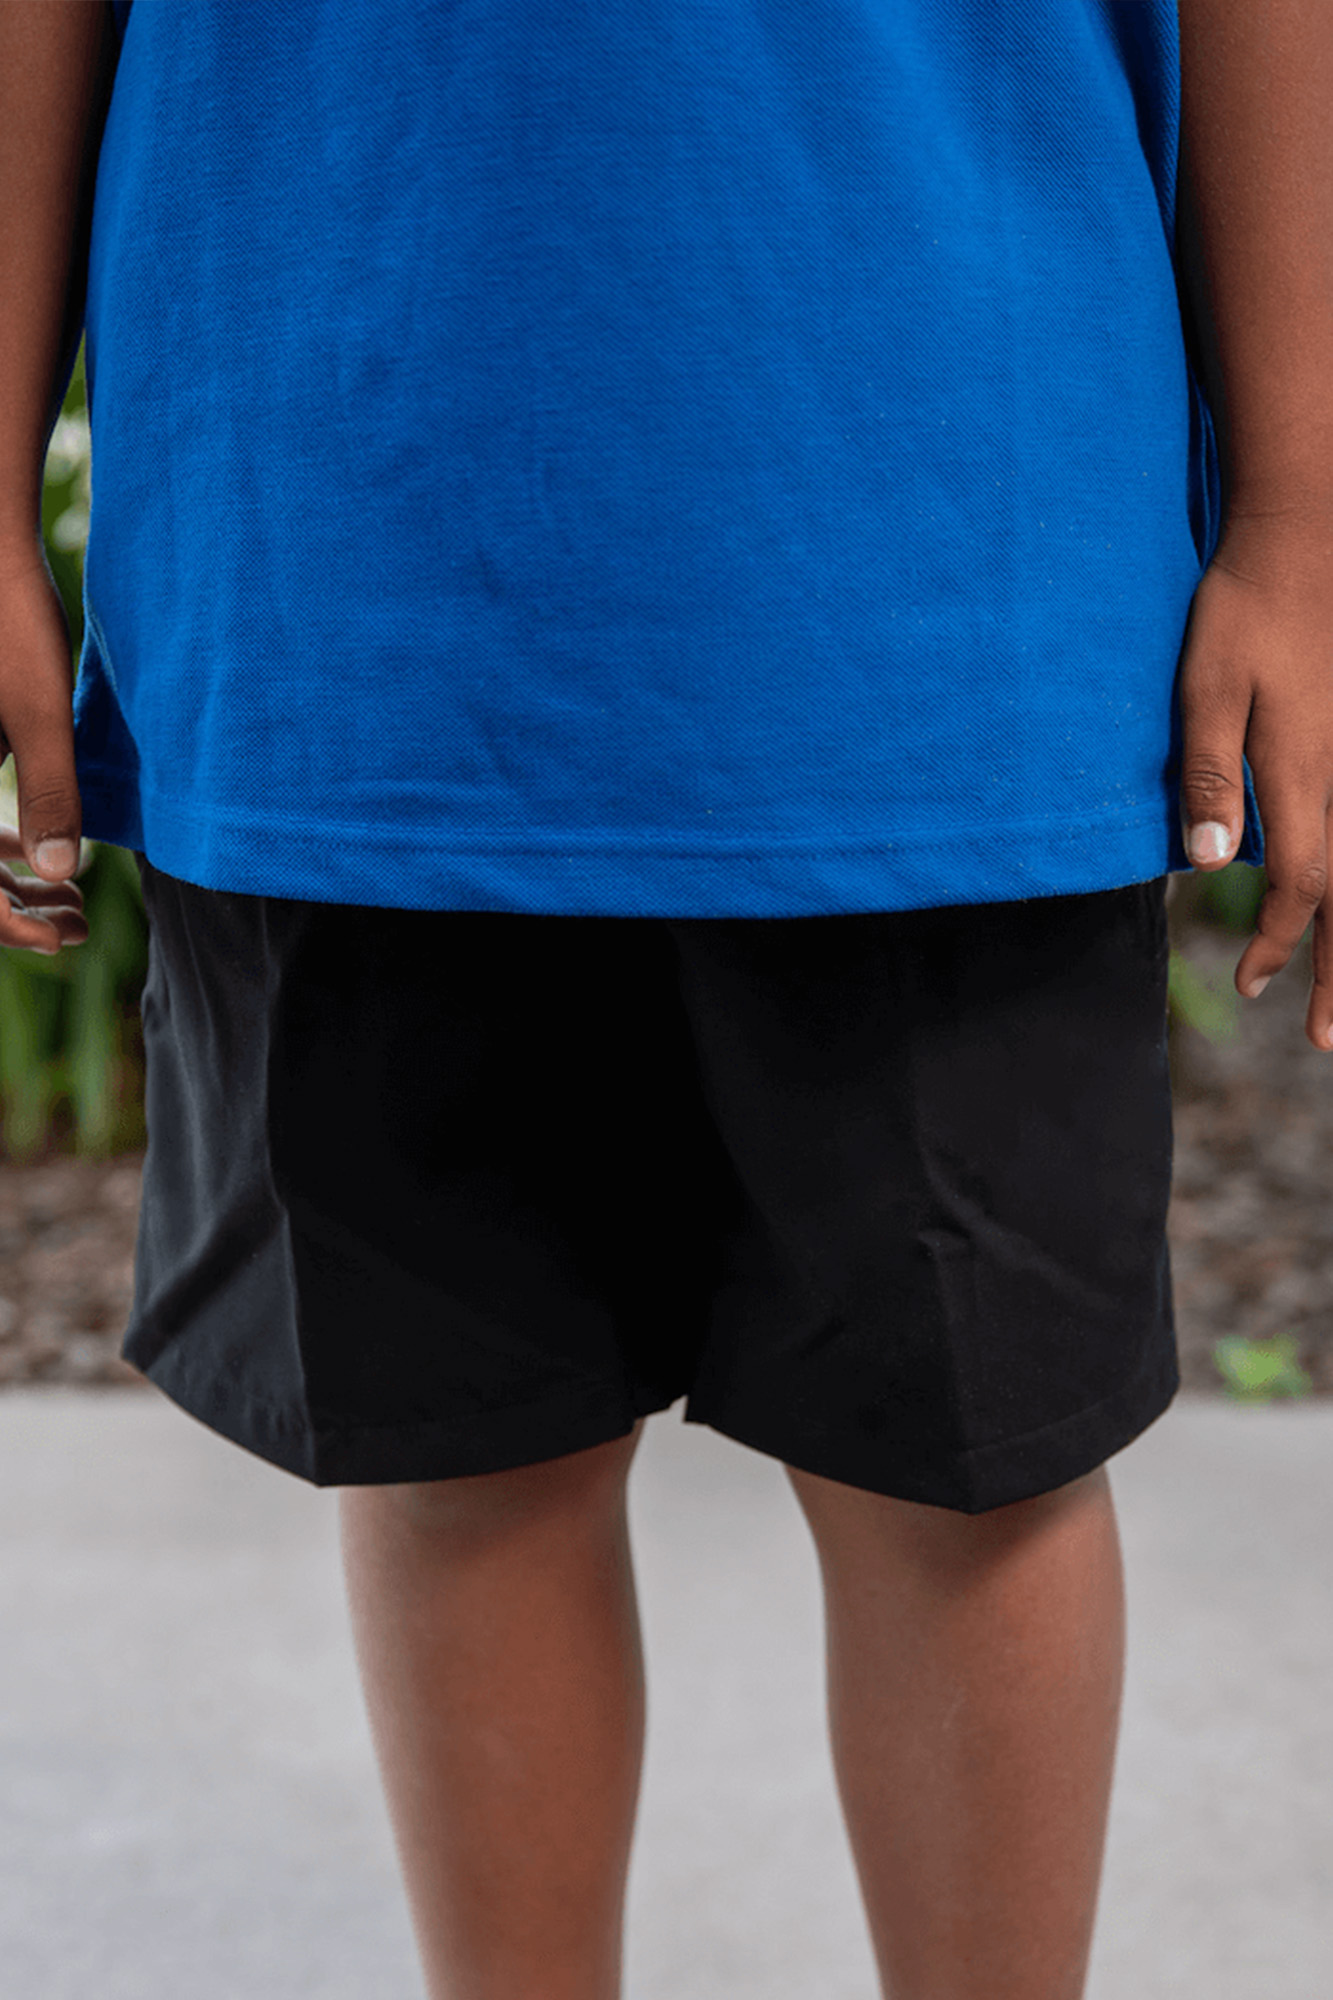 child wearing black shorts and blue shirt